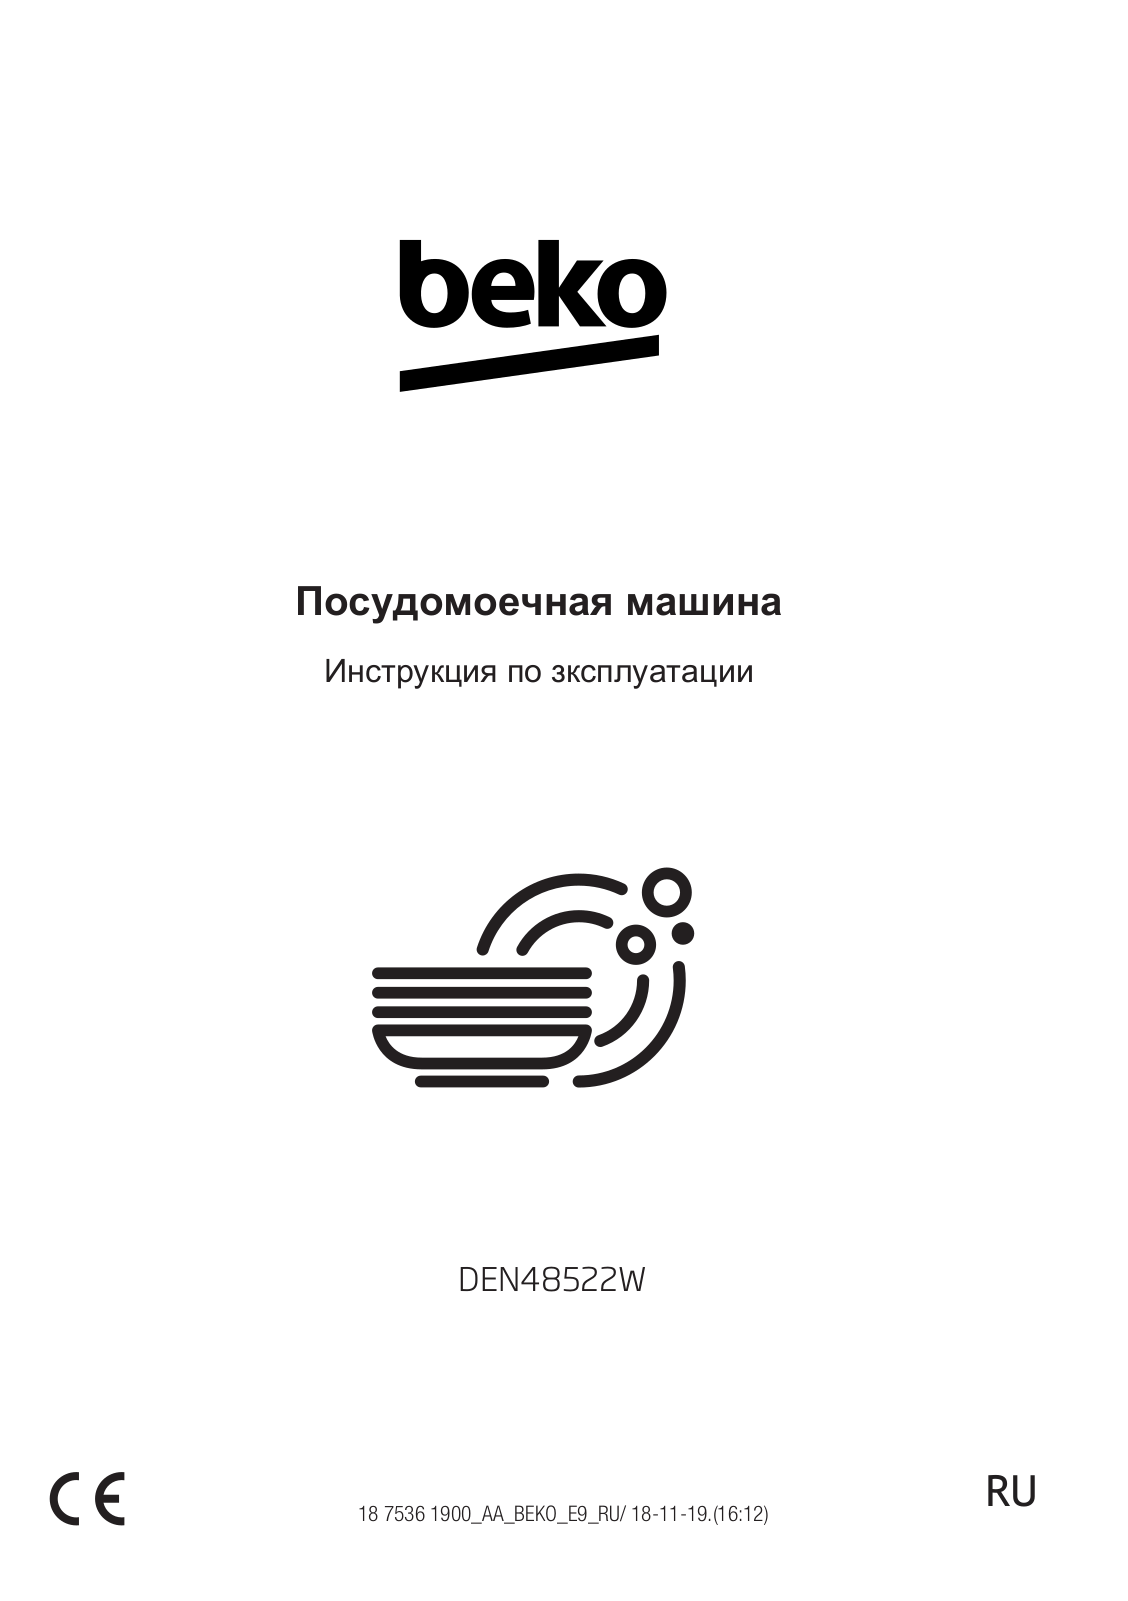 Beko DEN48522W User Manual